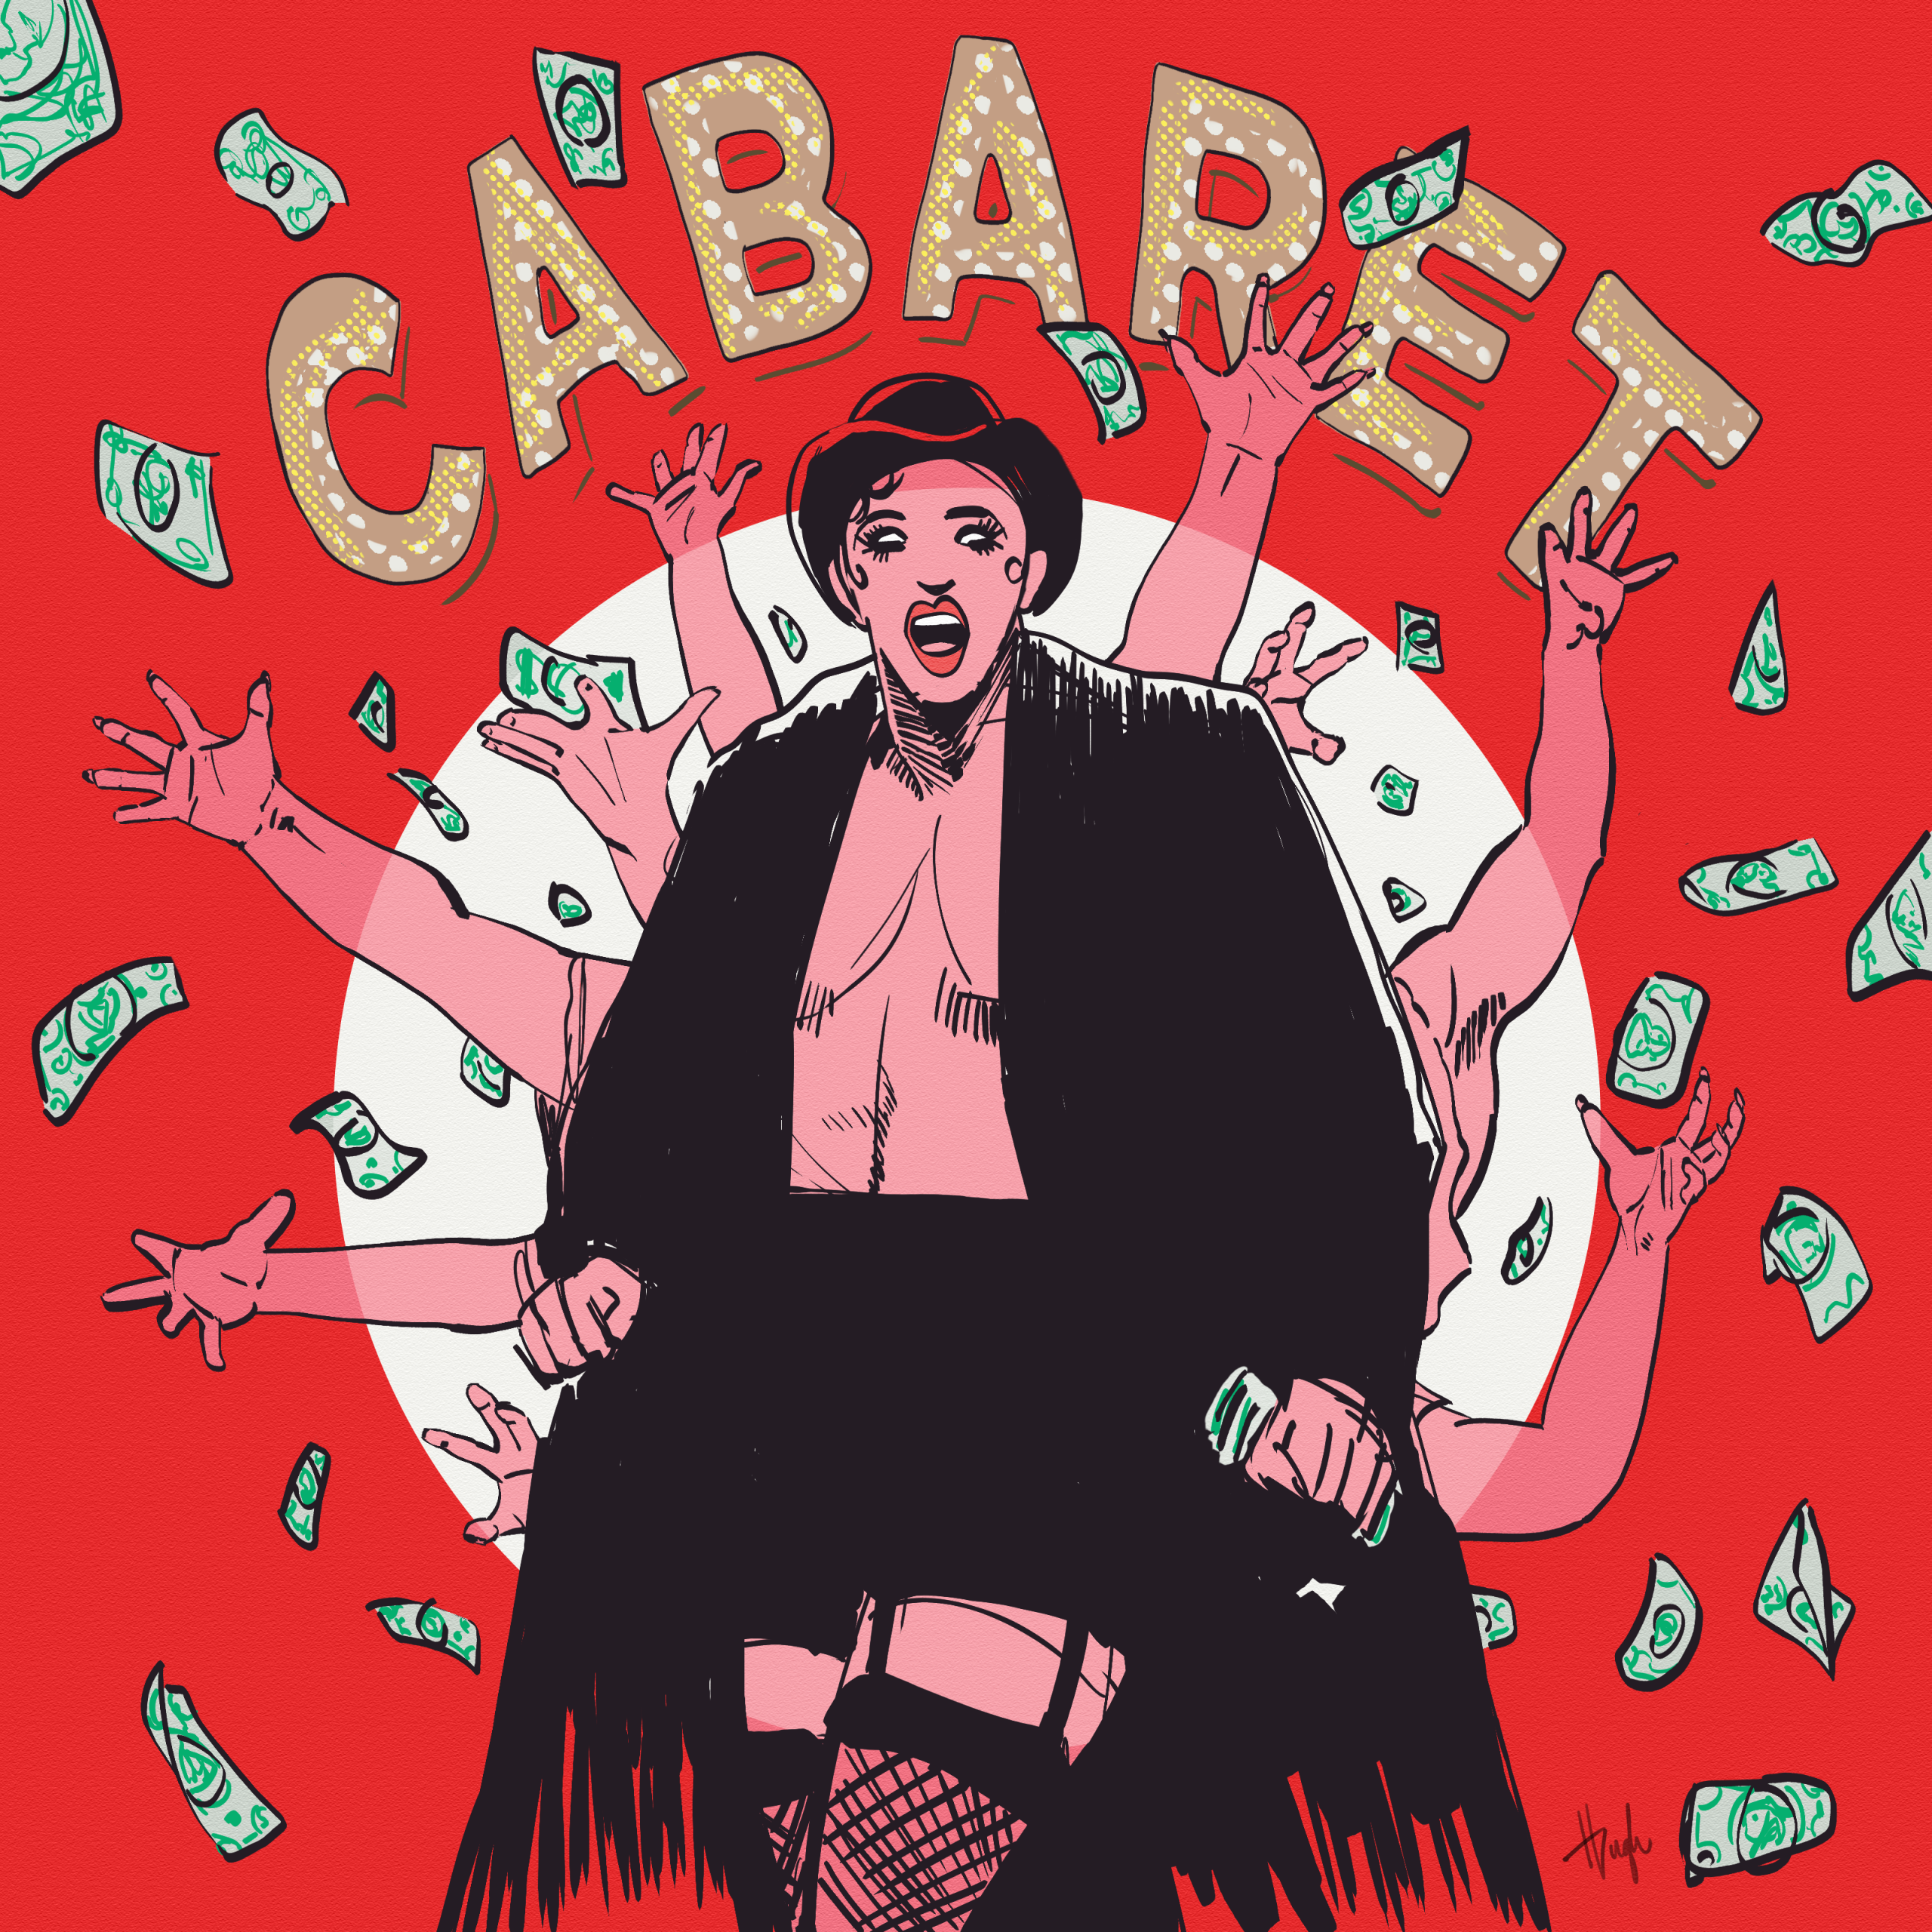 cabaret poster